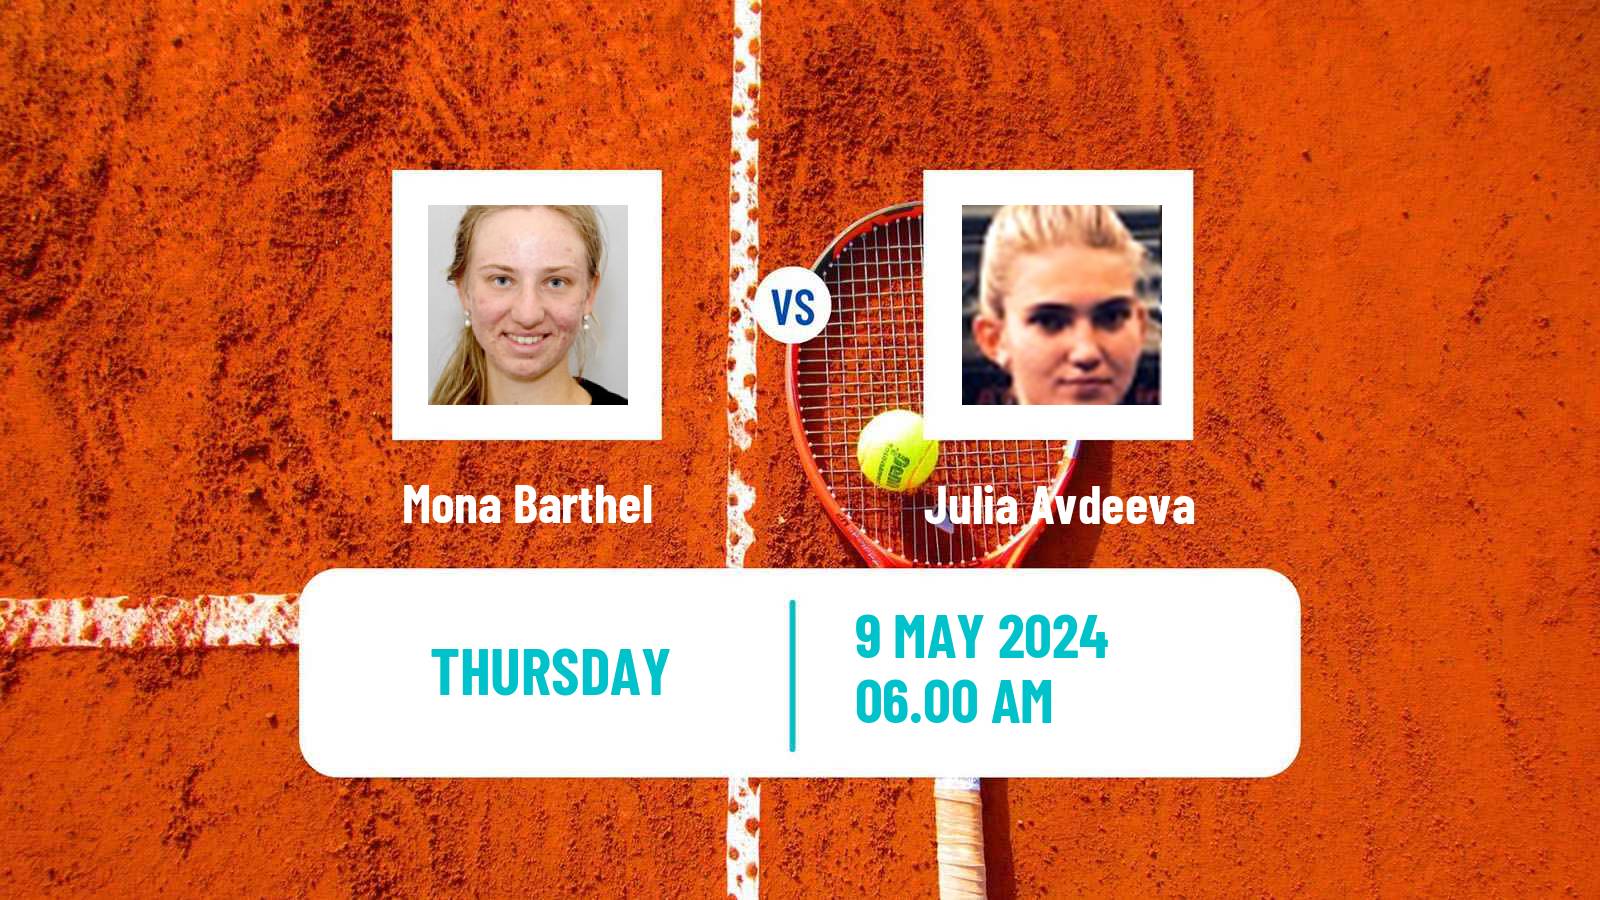 Tennis ITF W75 Trnava 2 Women Mona Barthel - Julia Avdeeva